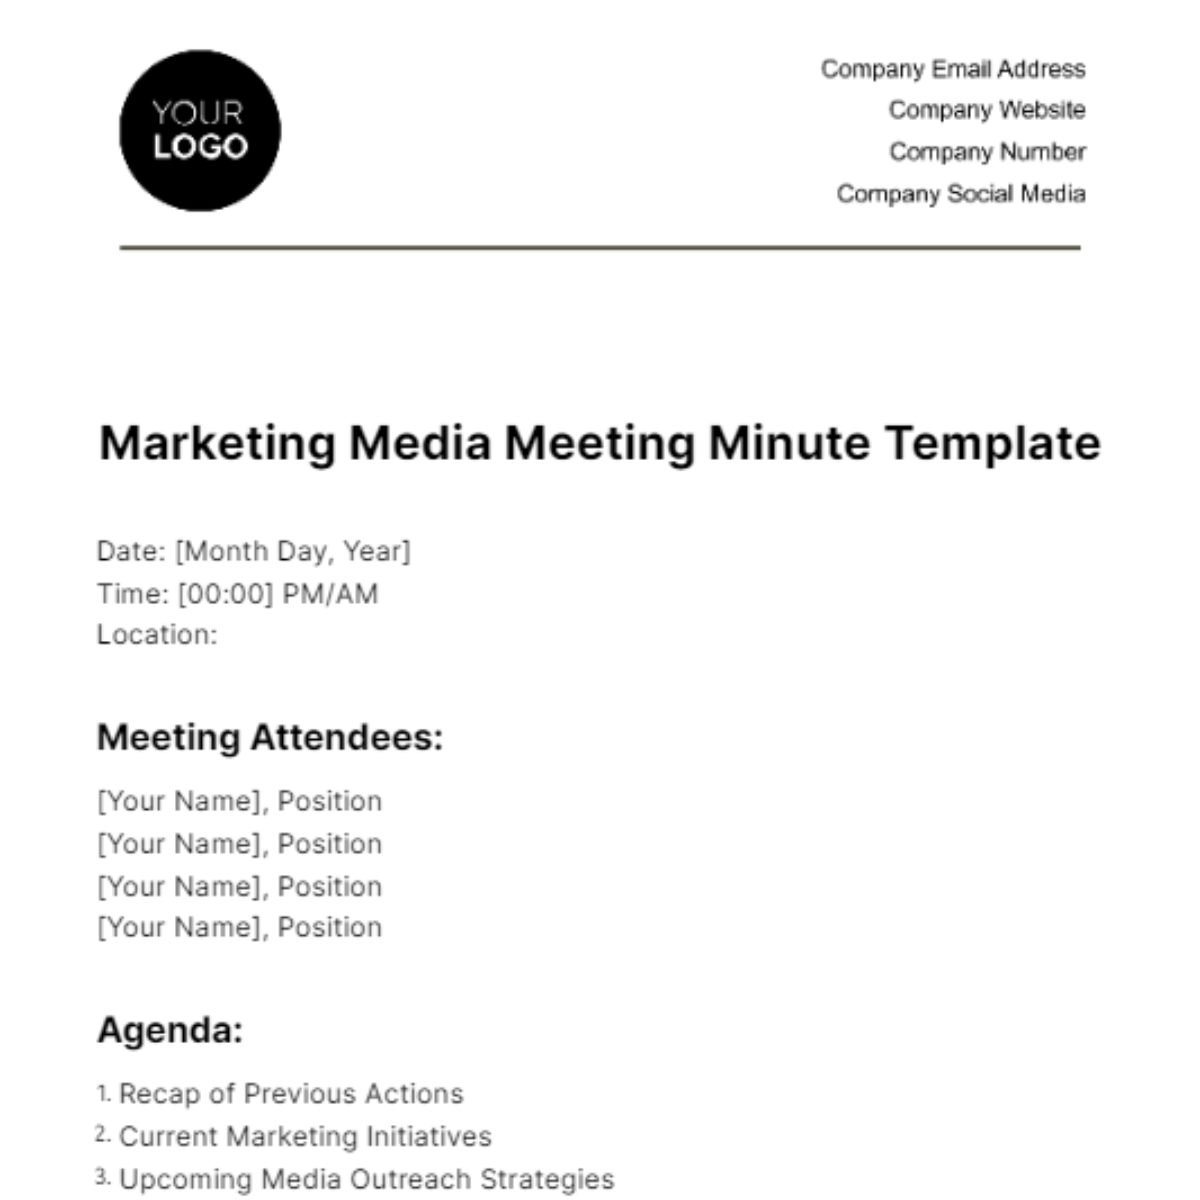 Marketing Media Meeting Minute Template